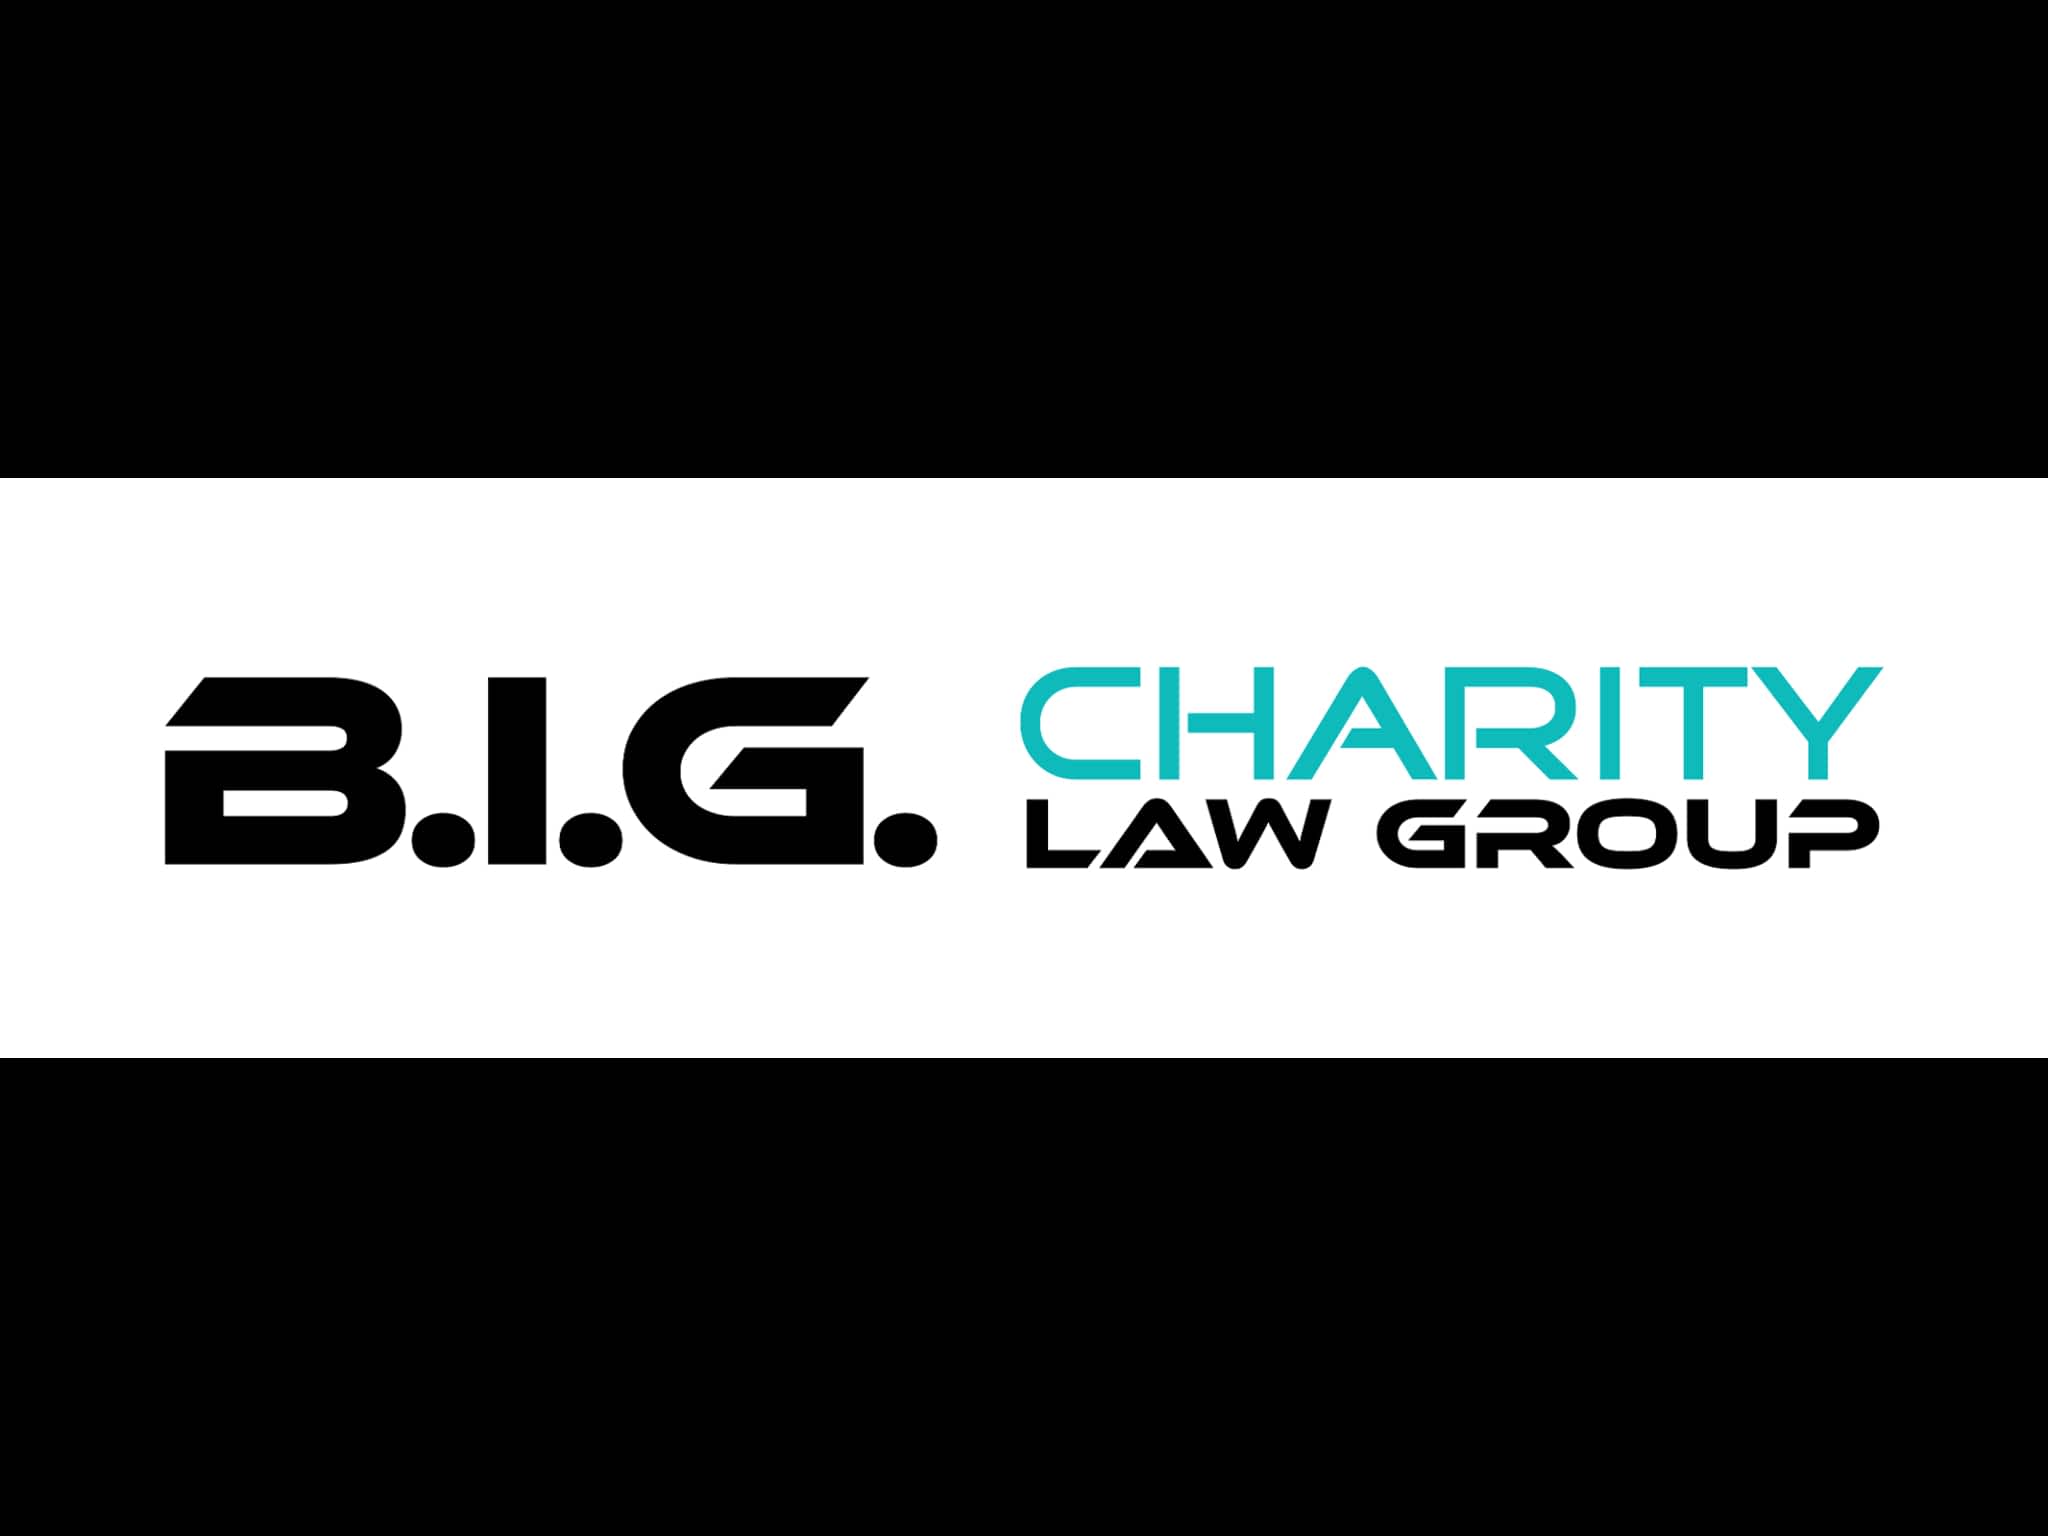 photo B.I.G. Charity Law Group